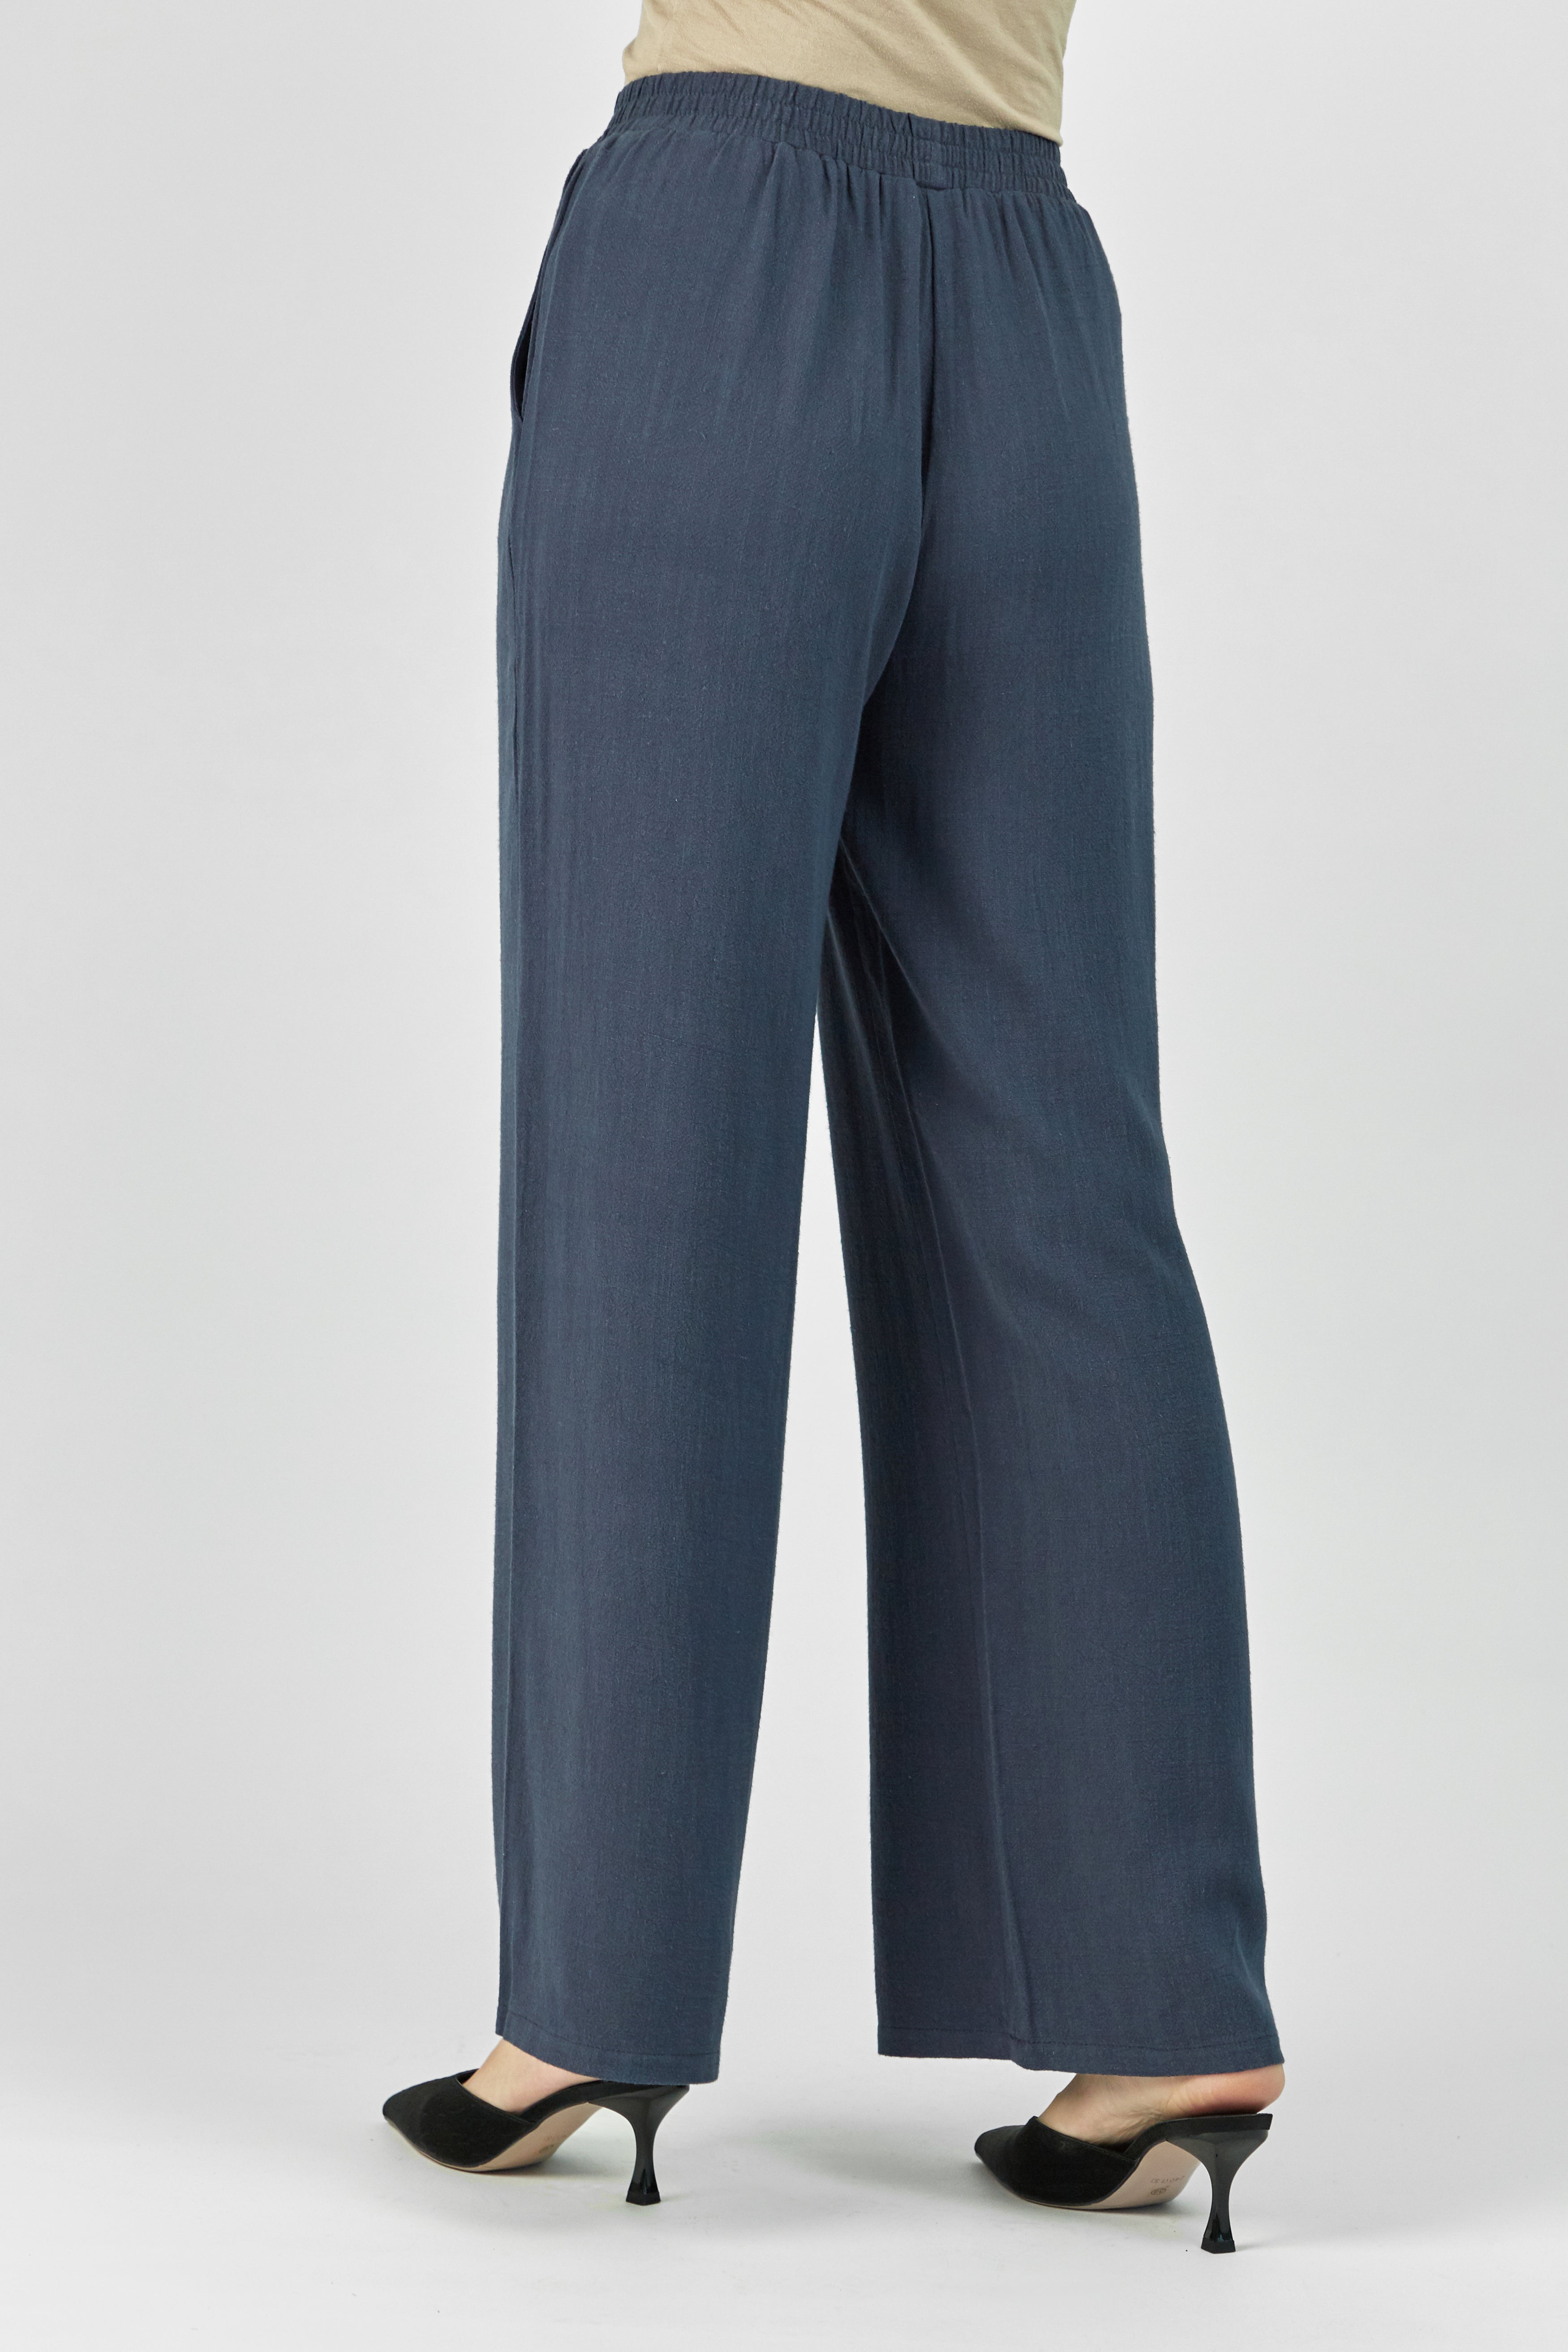 AE - Linen Blend Pants - Royal Blue